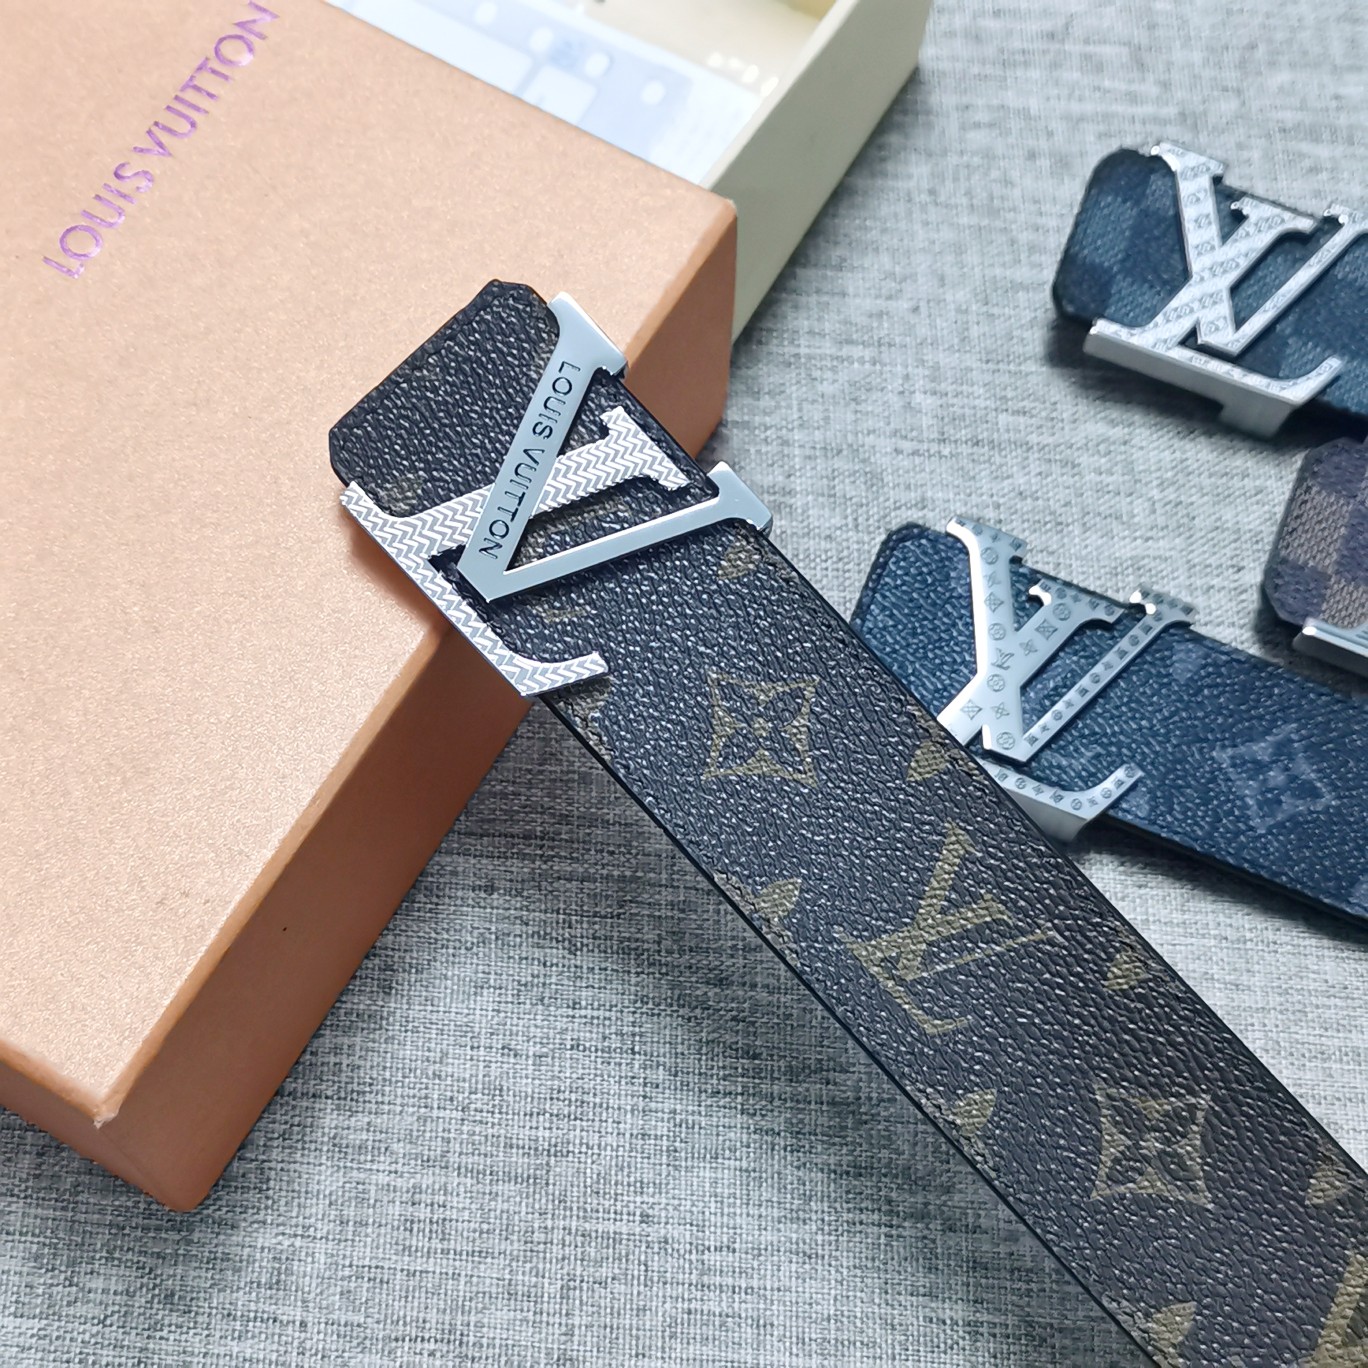 LouisVuitton[正]4.0cm宽度LV字母钢扣商务服装造型的完美搭配永恒经典！